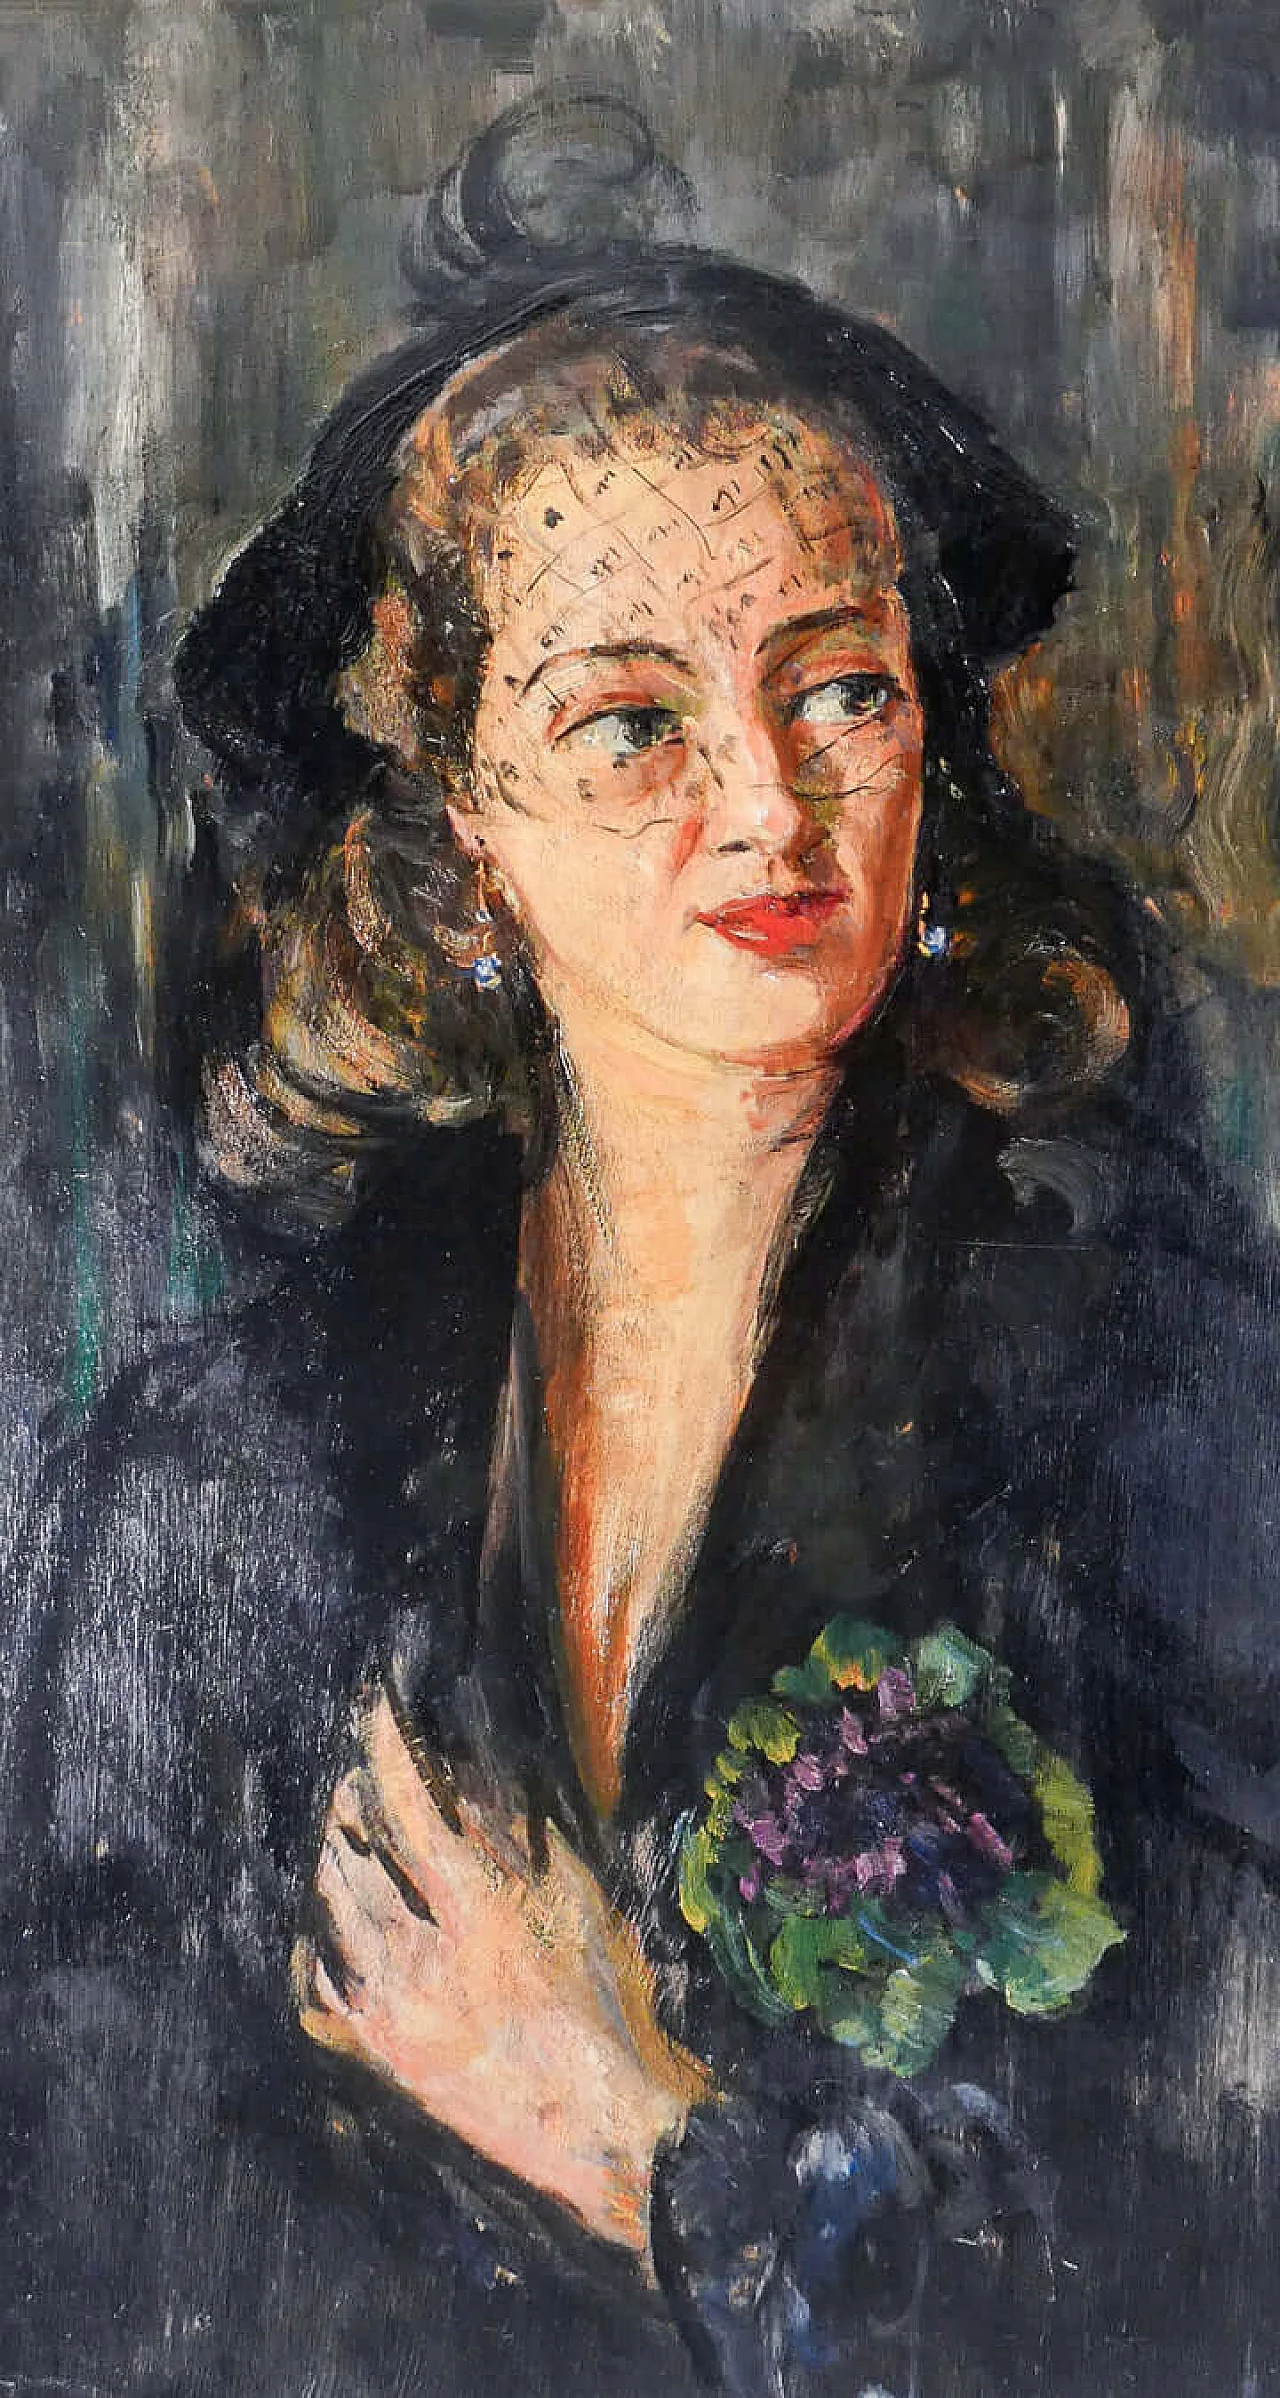 Pier Antonio Gariazzo, Portrait of Mrs. Rito, oil painting on panel, 1958 3